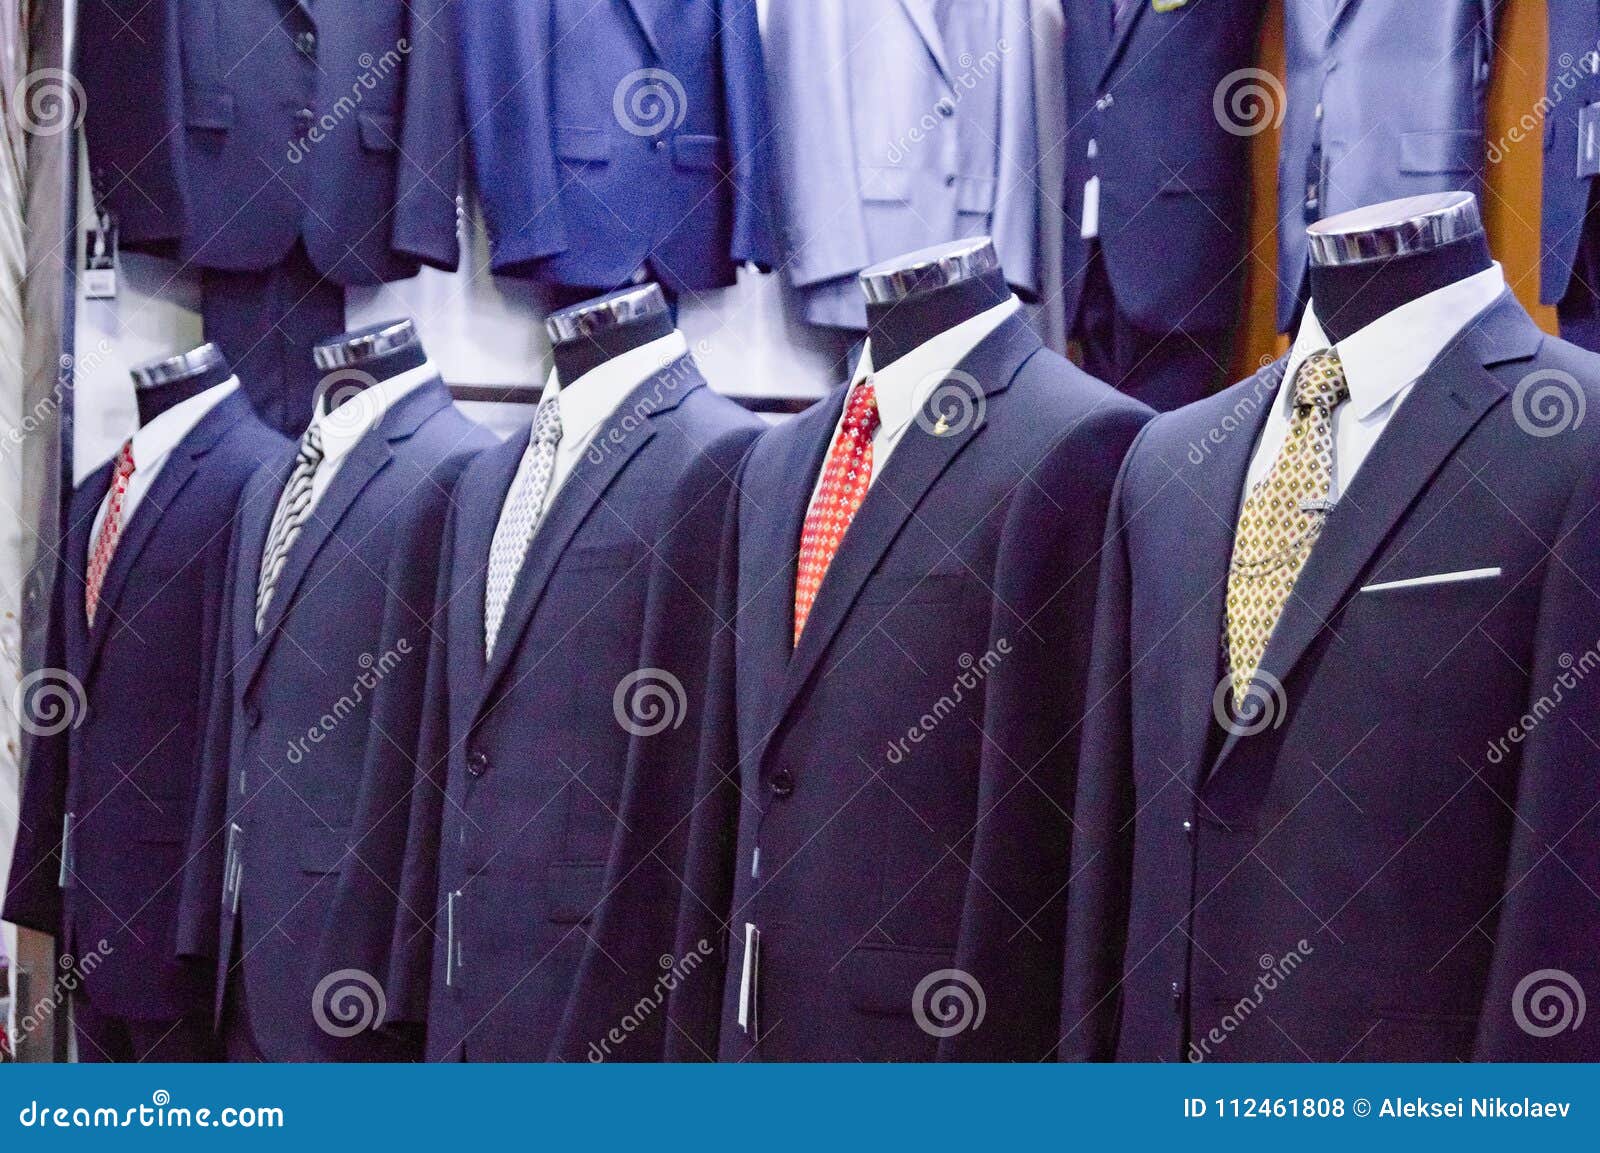 Classic Men's suits